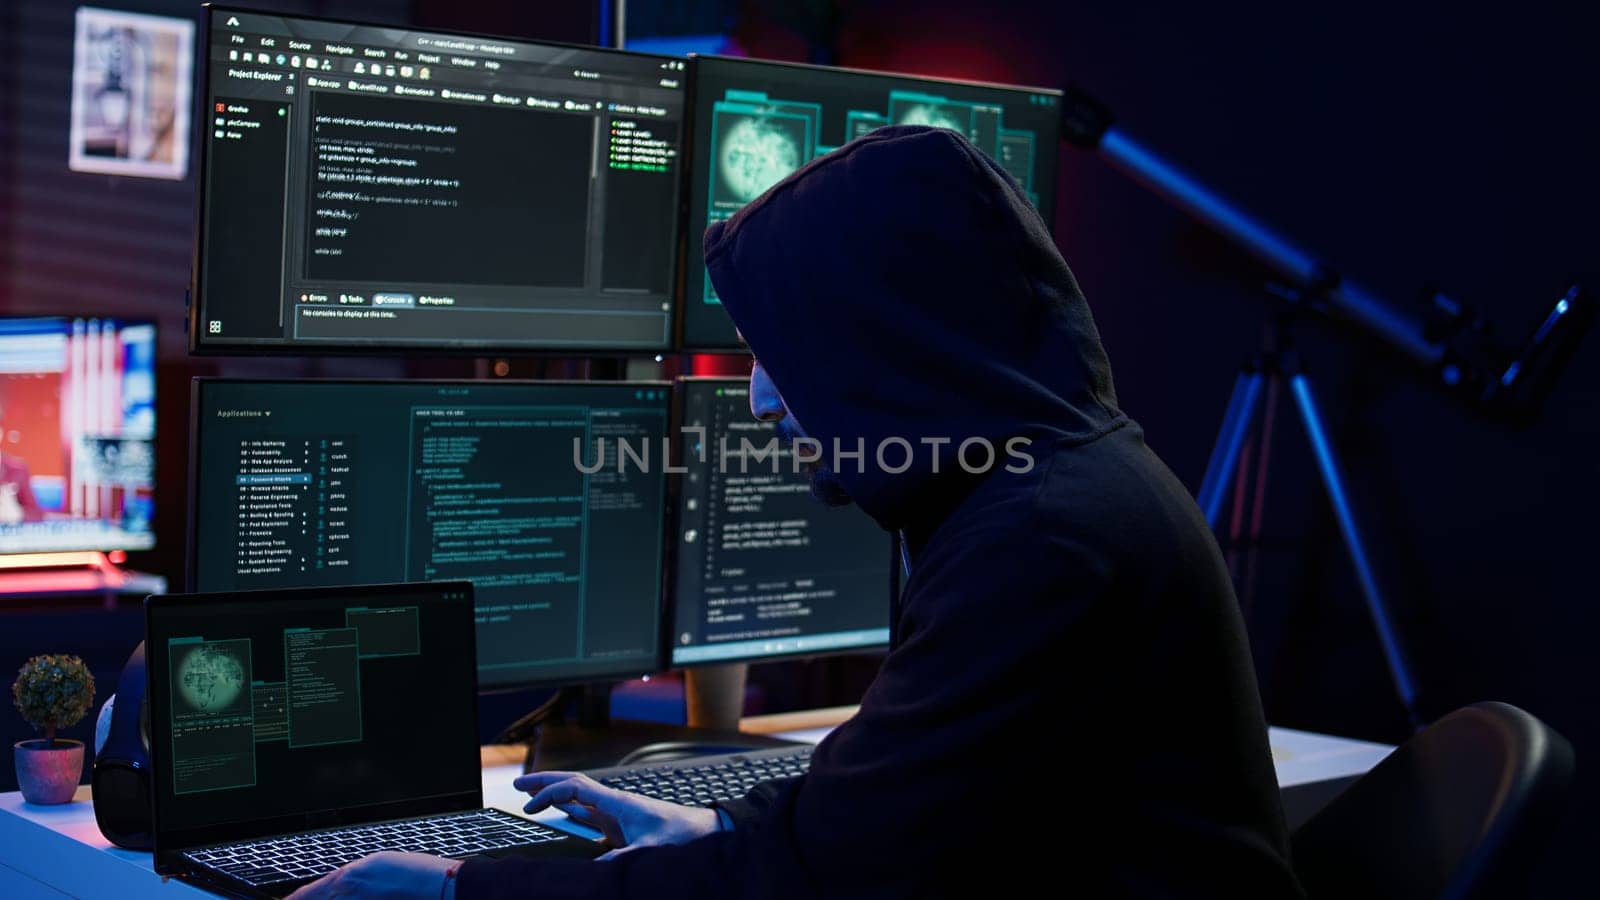 Hacker arriving in hidden underground shelter, prepared to launch DDoS attack by DCStudio